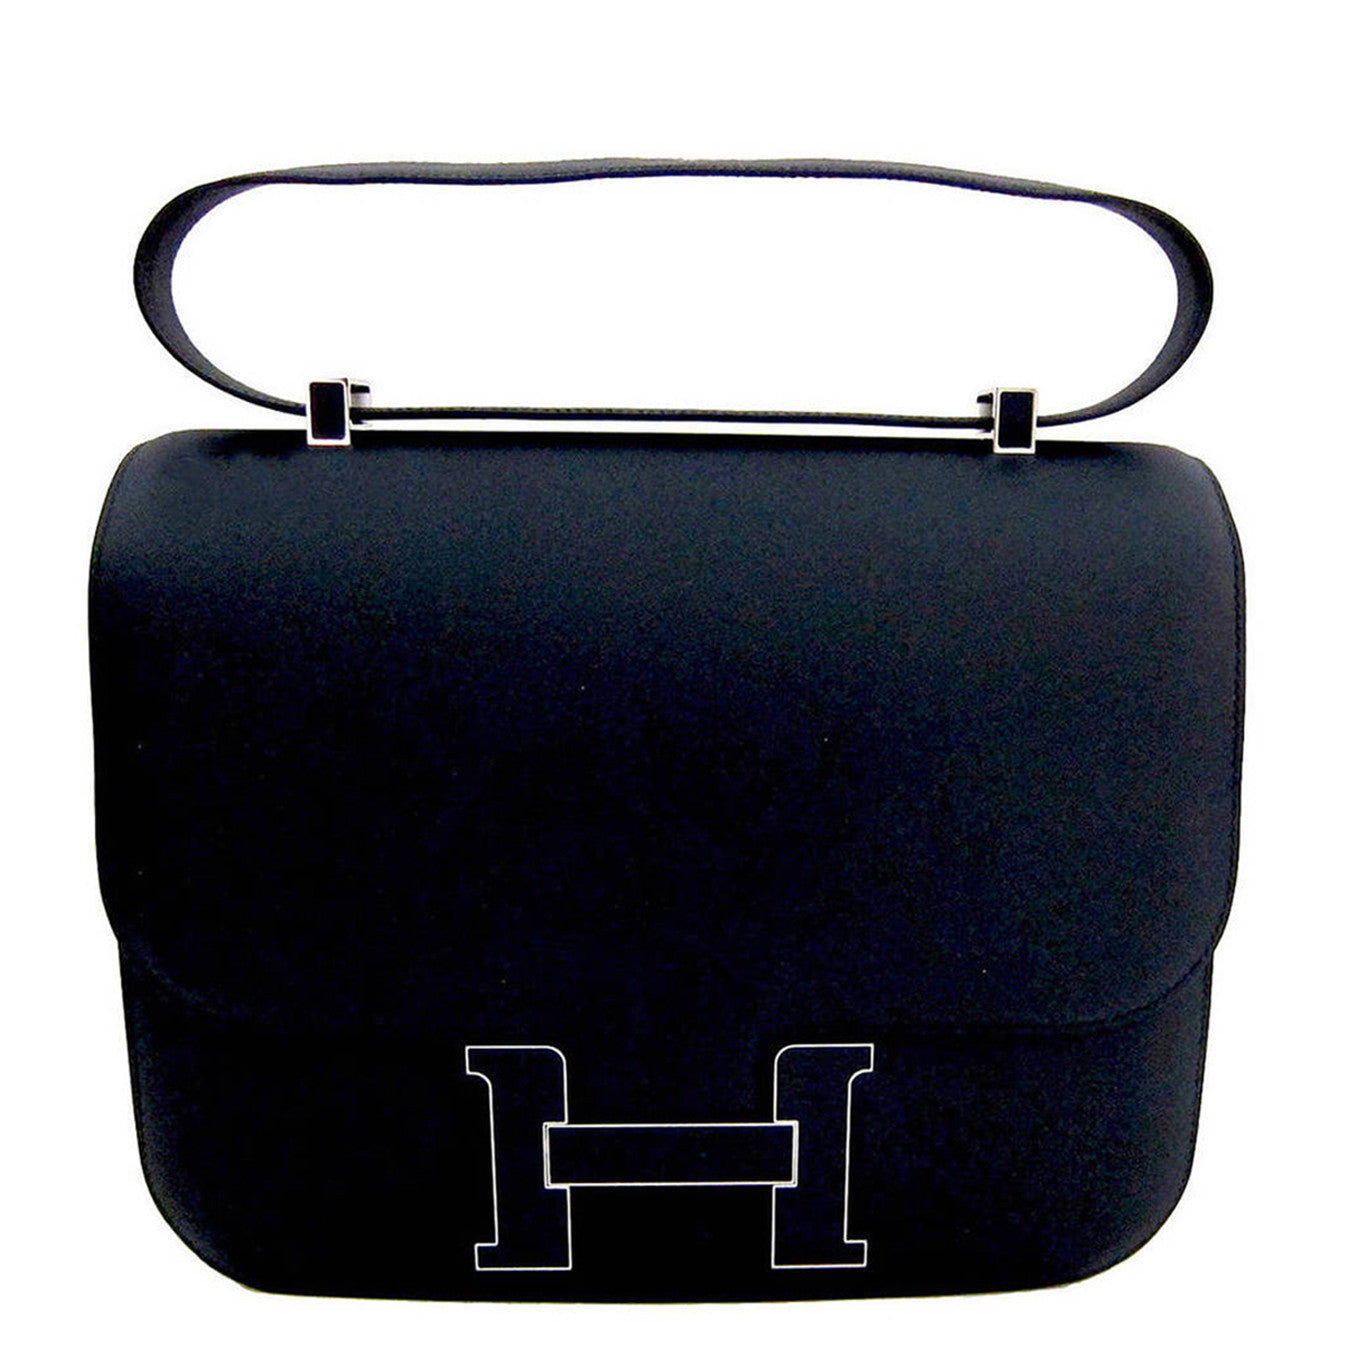 Hermes Feu Orange Kelly Wallet Chevre Palladium PHW Clutch Bag Iconic -  Chicjoy